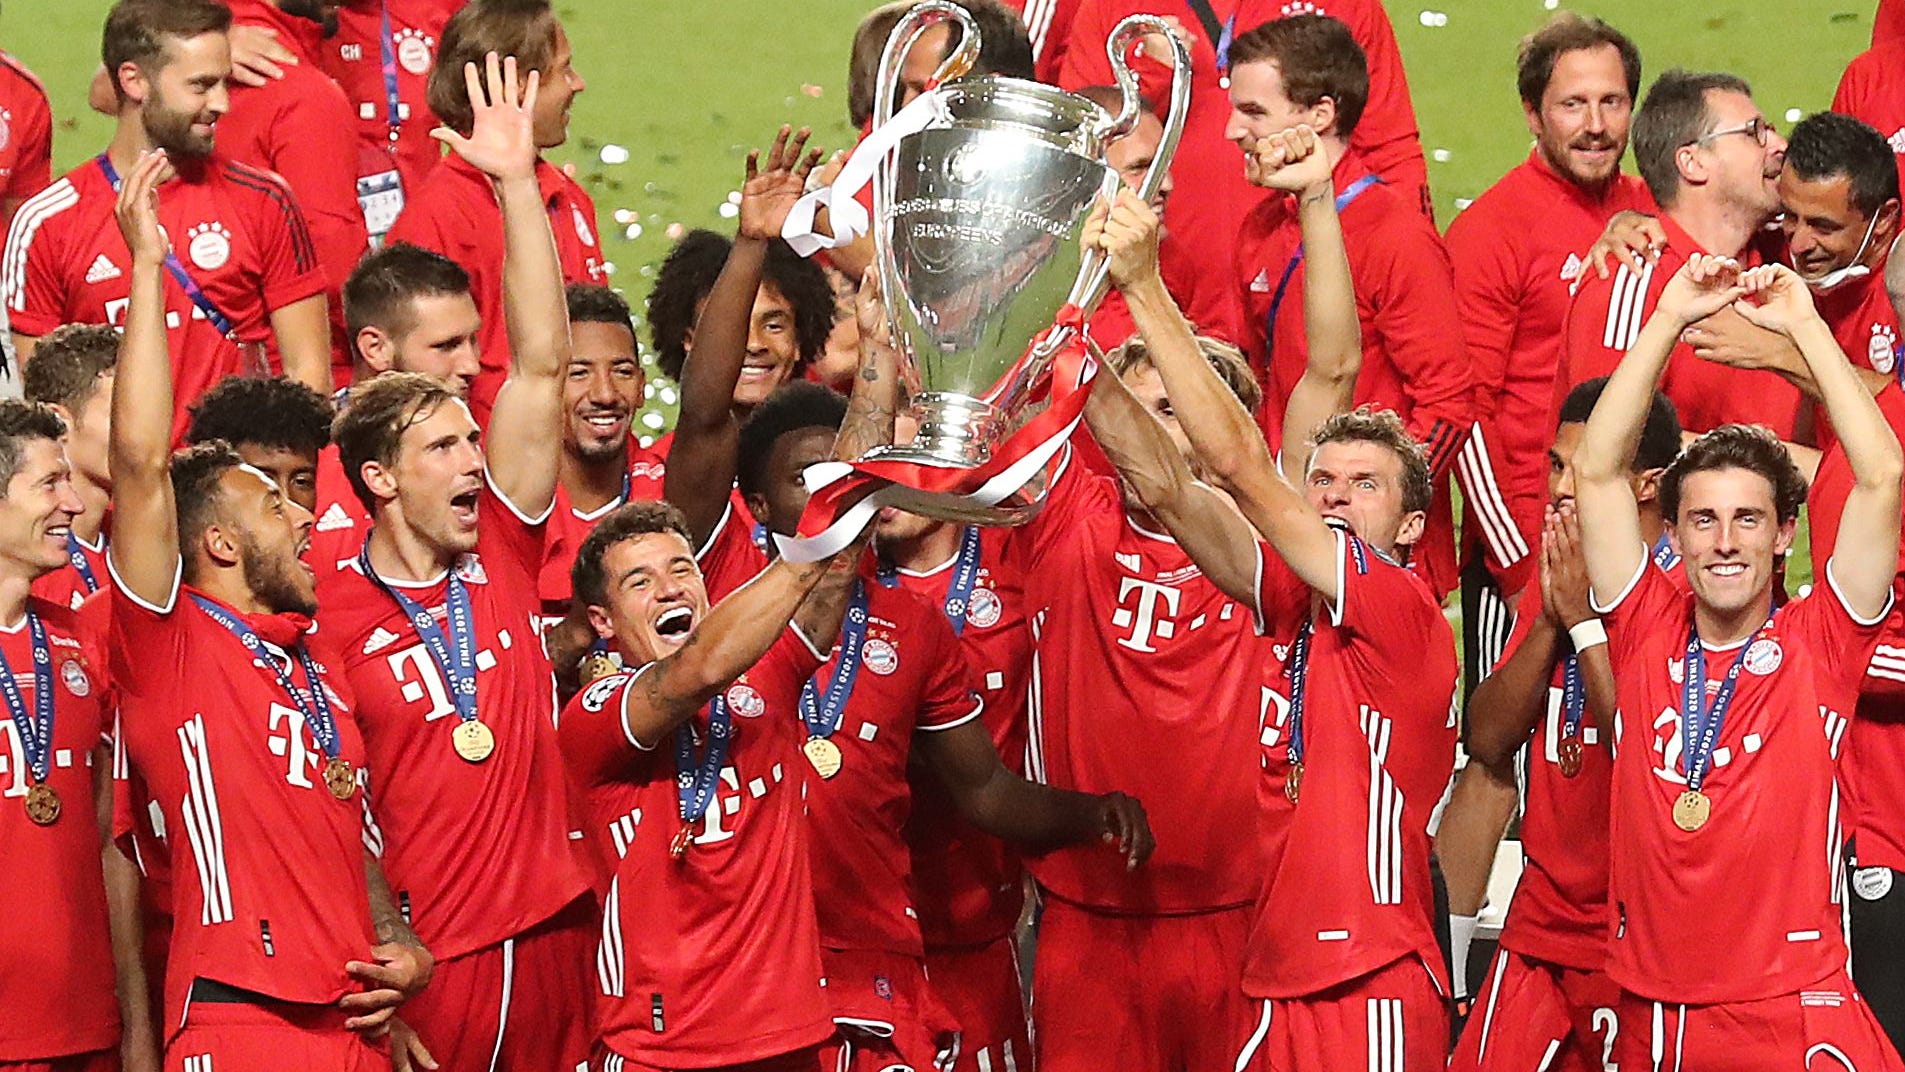 Champions final: Bayern Munich tops Paris Saint-Germain